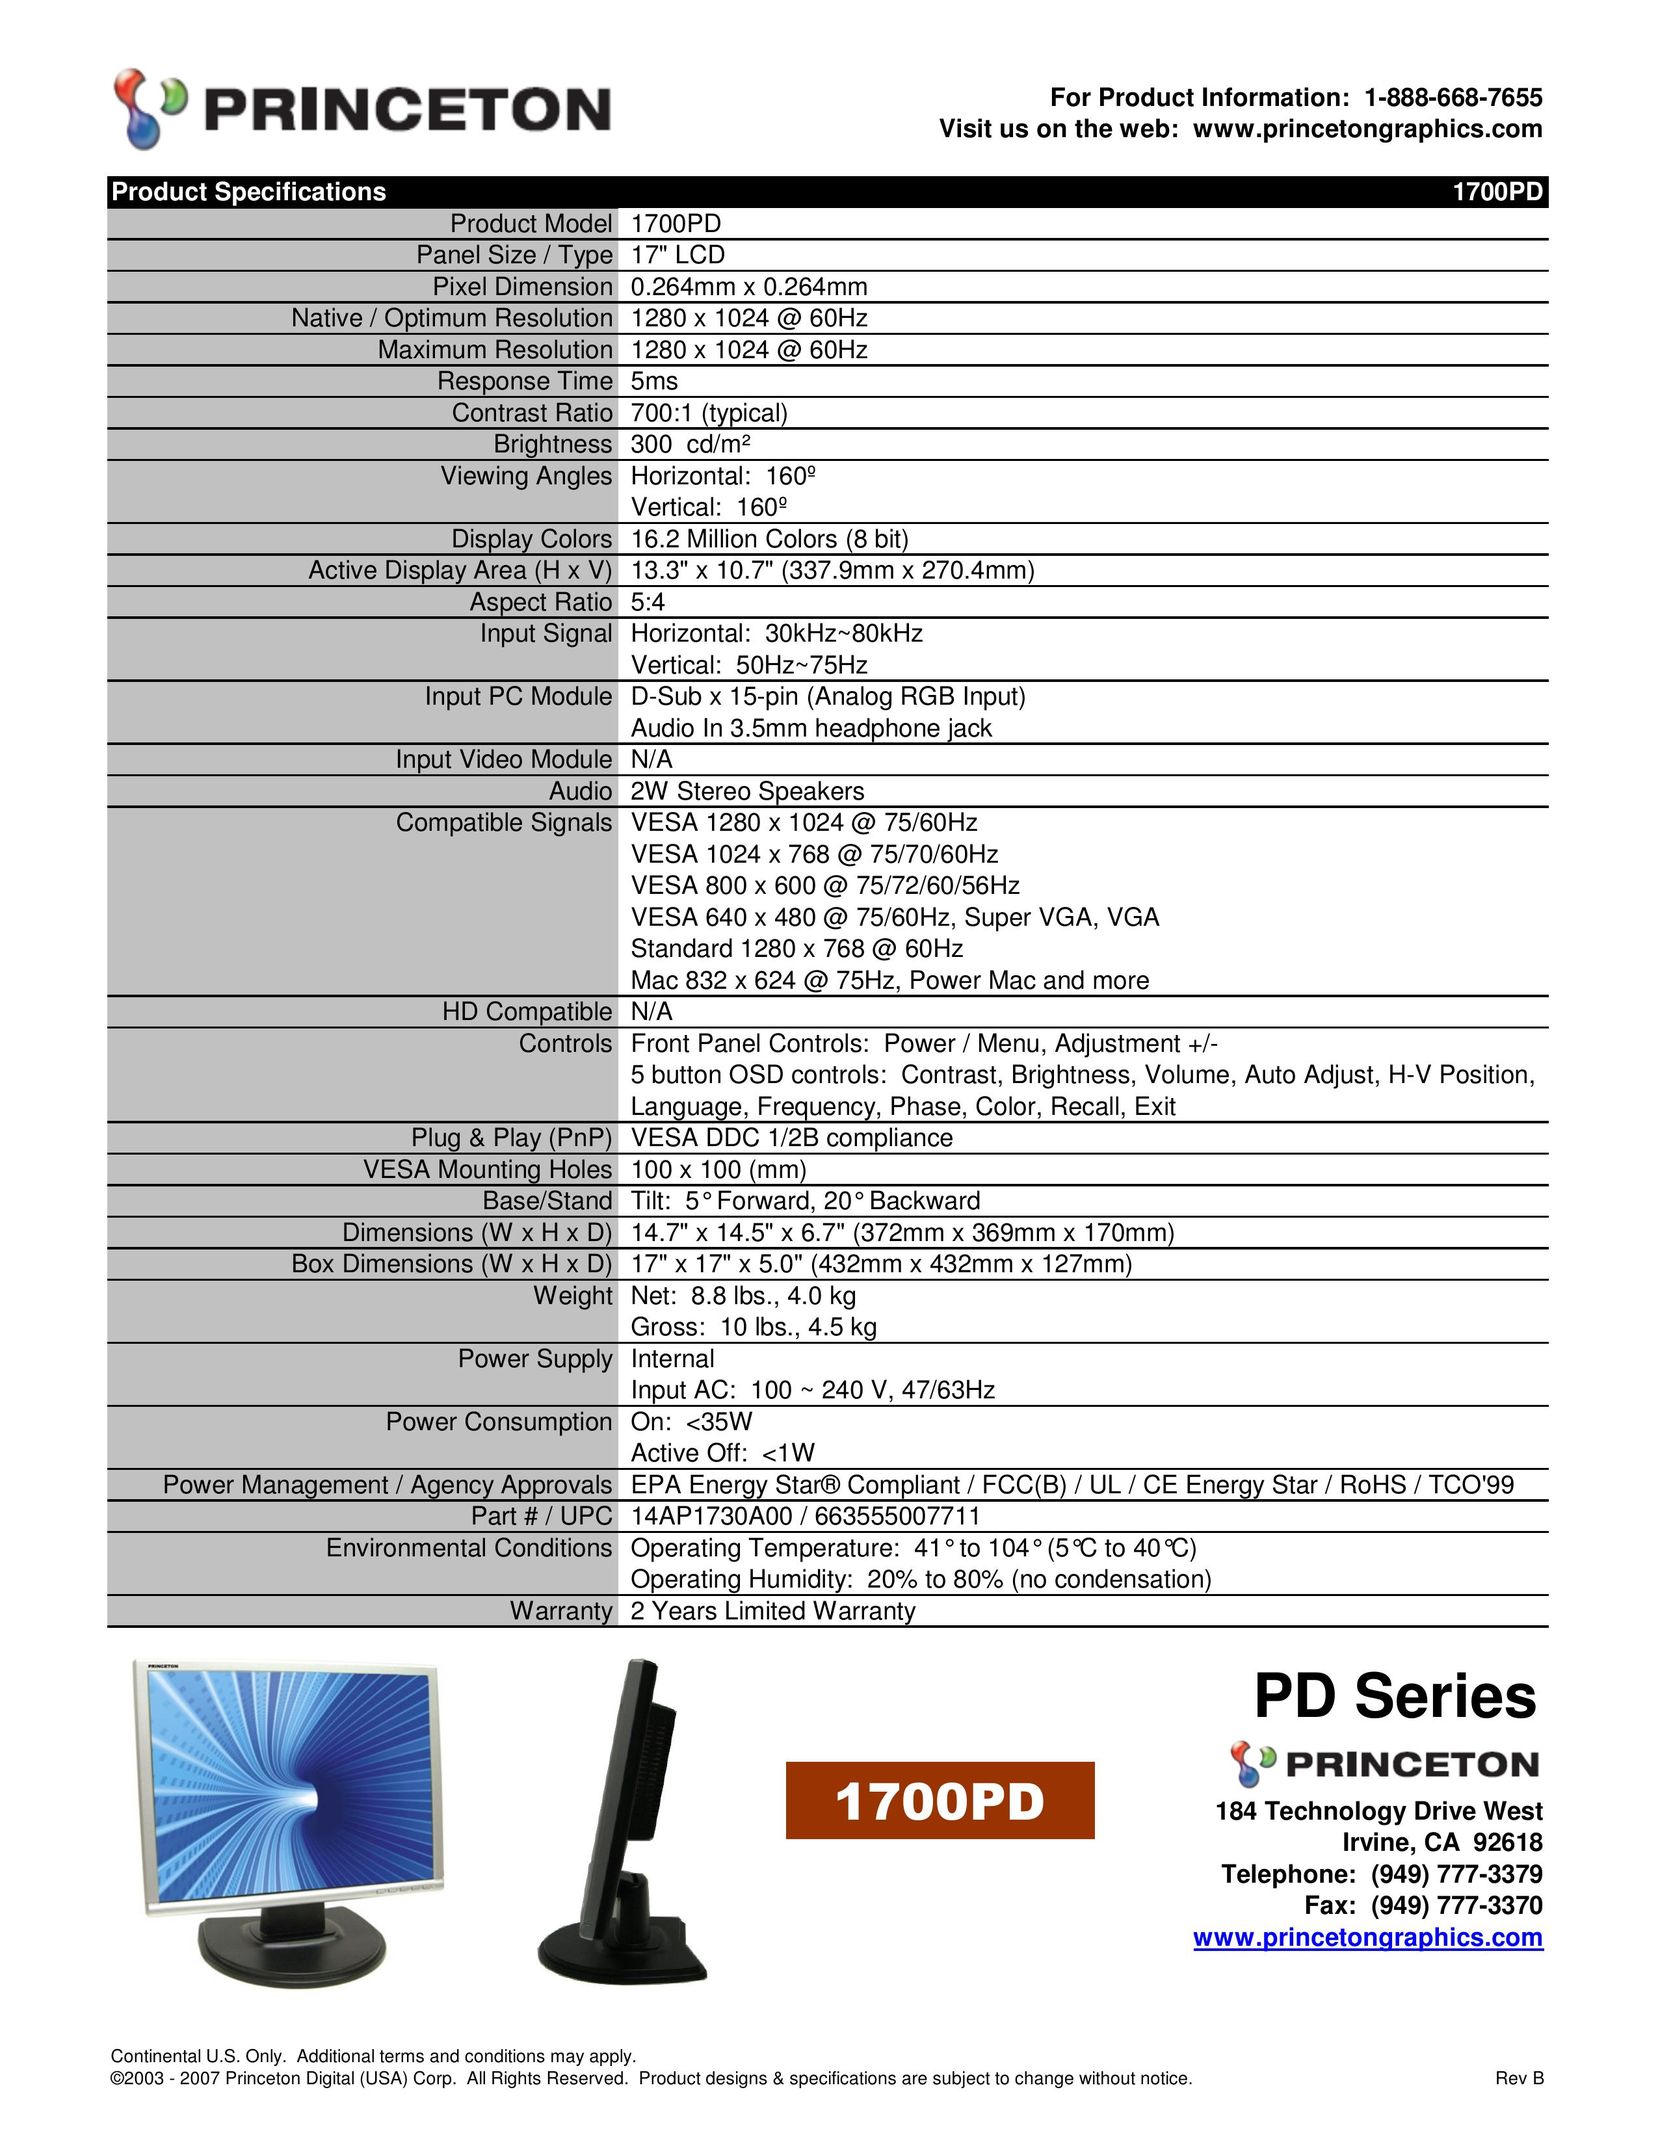 Princeton 1700PD Flat Panel Television User Manual